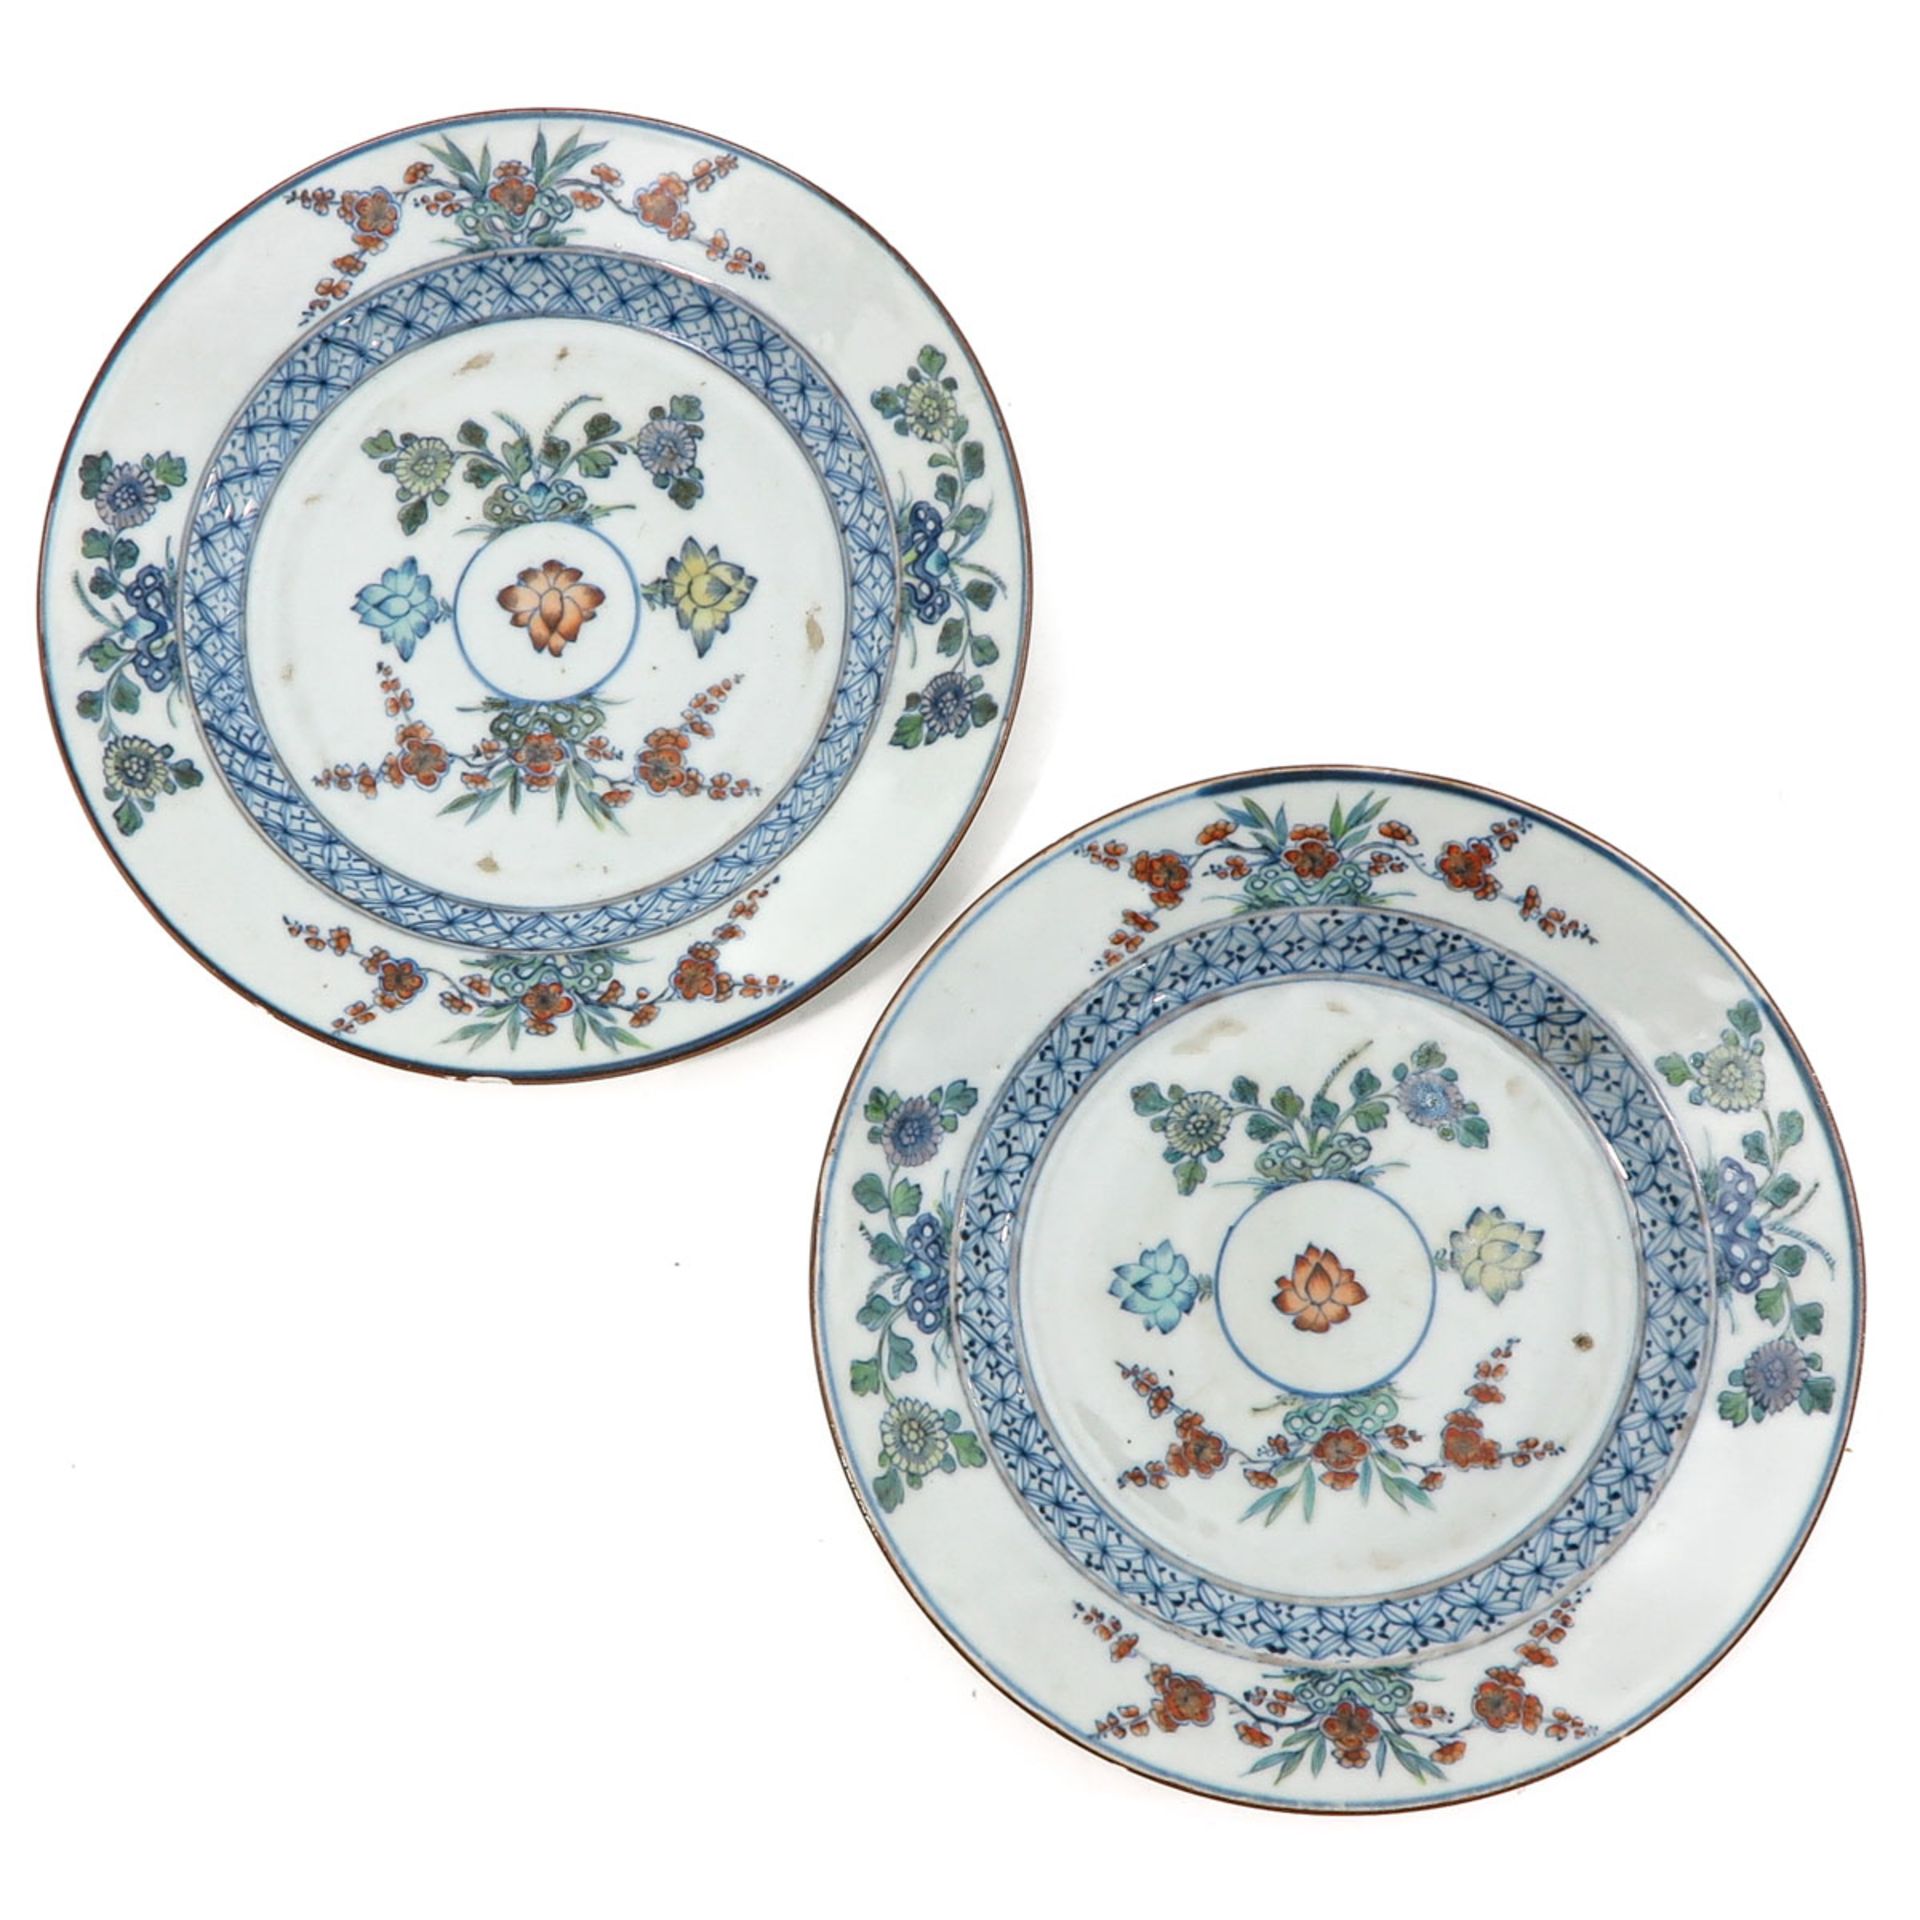 A Pair of Doucai Plates